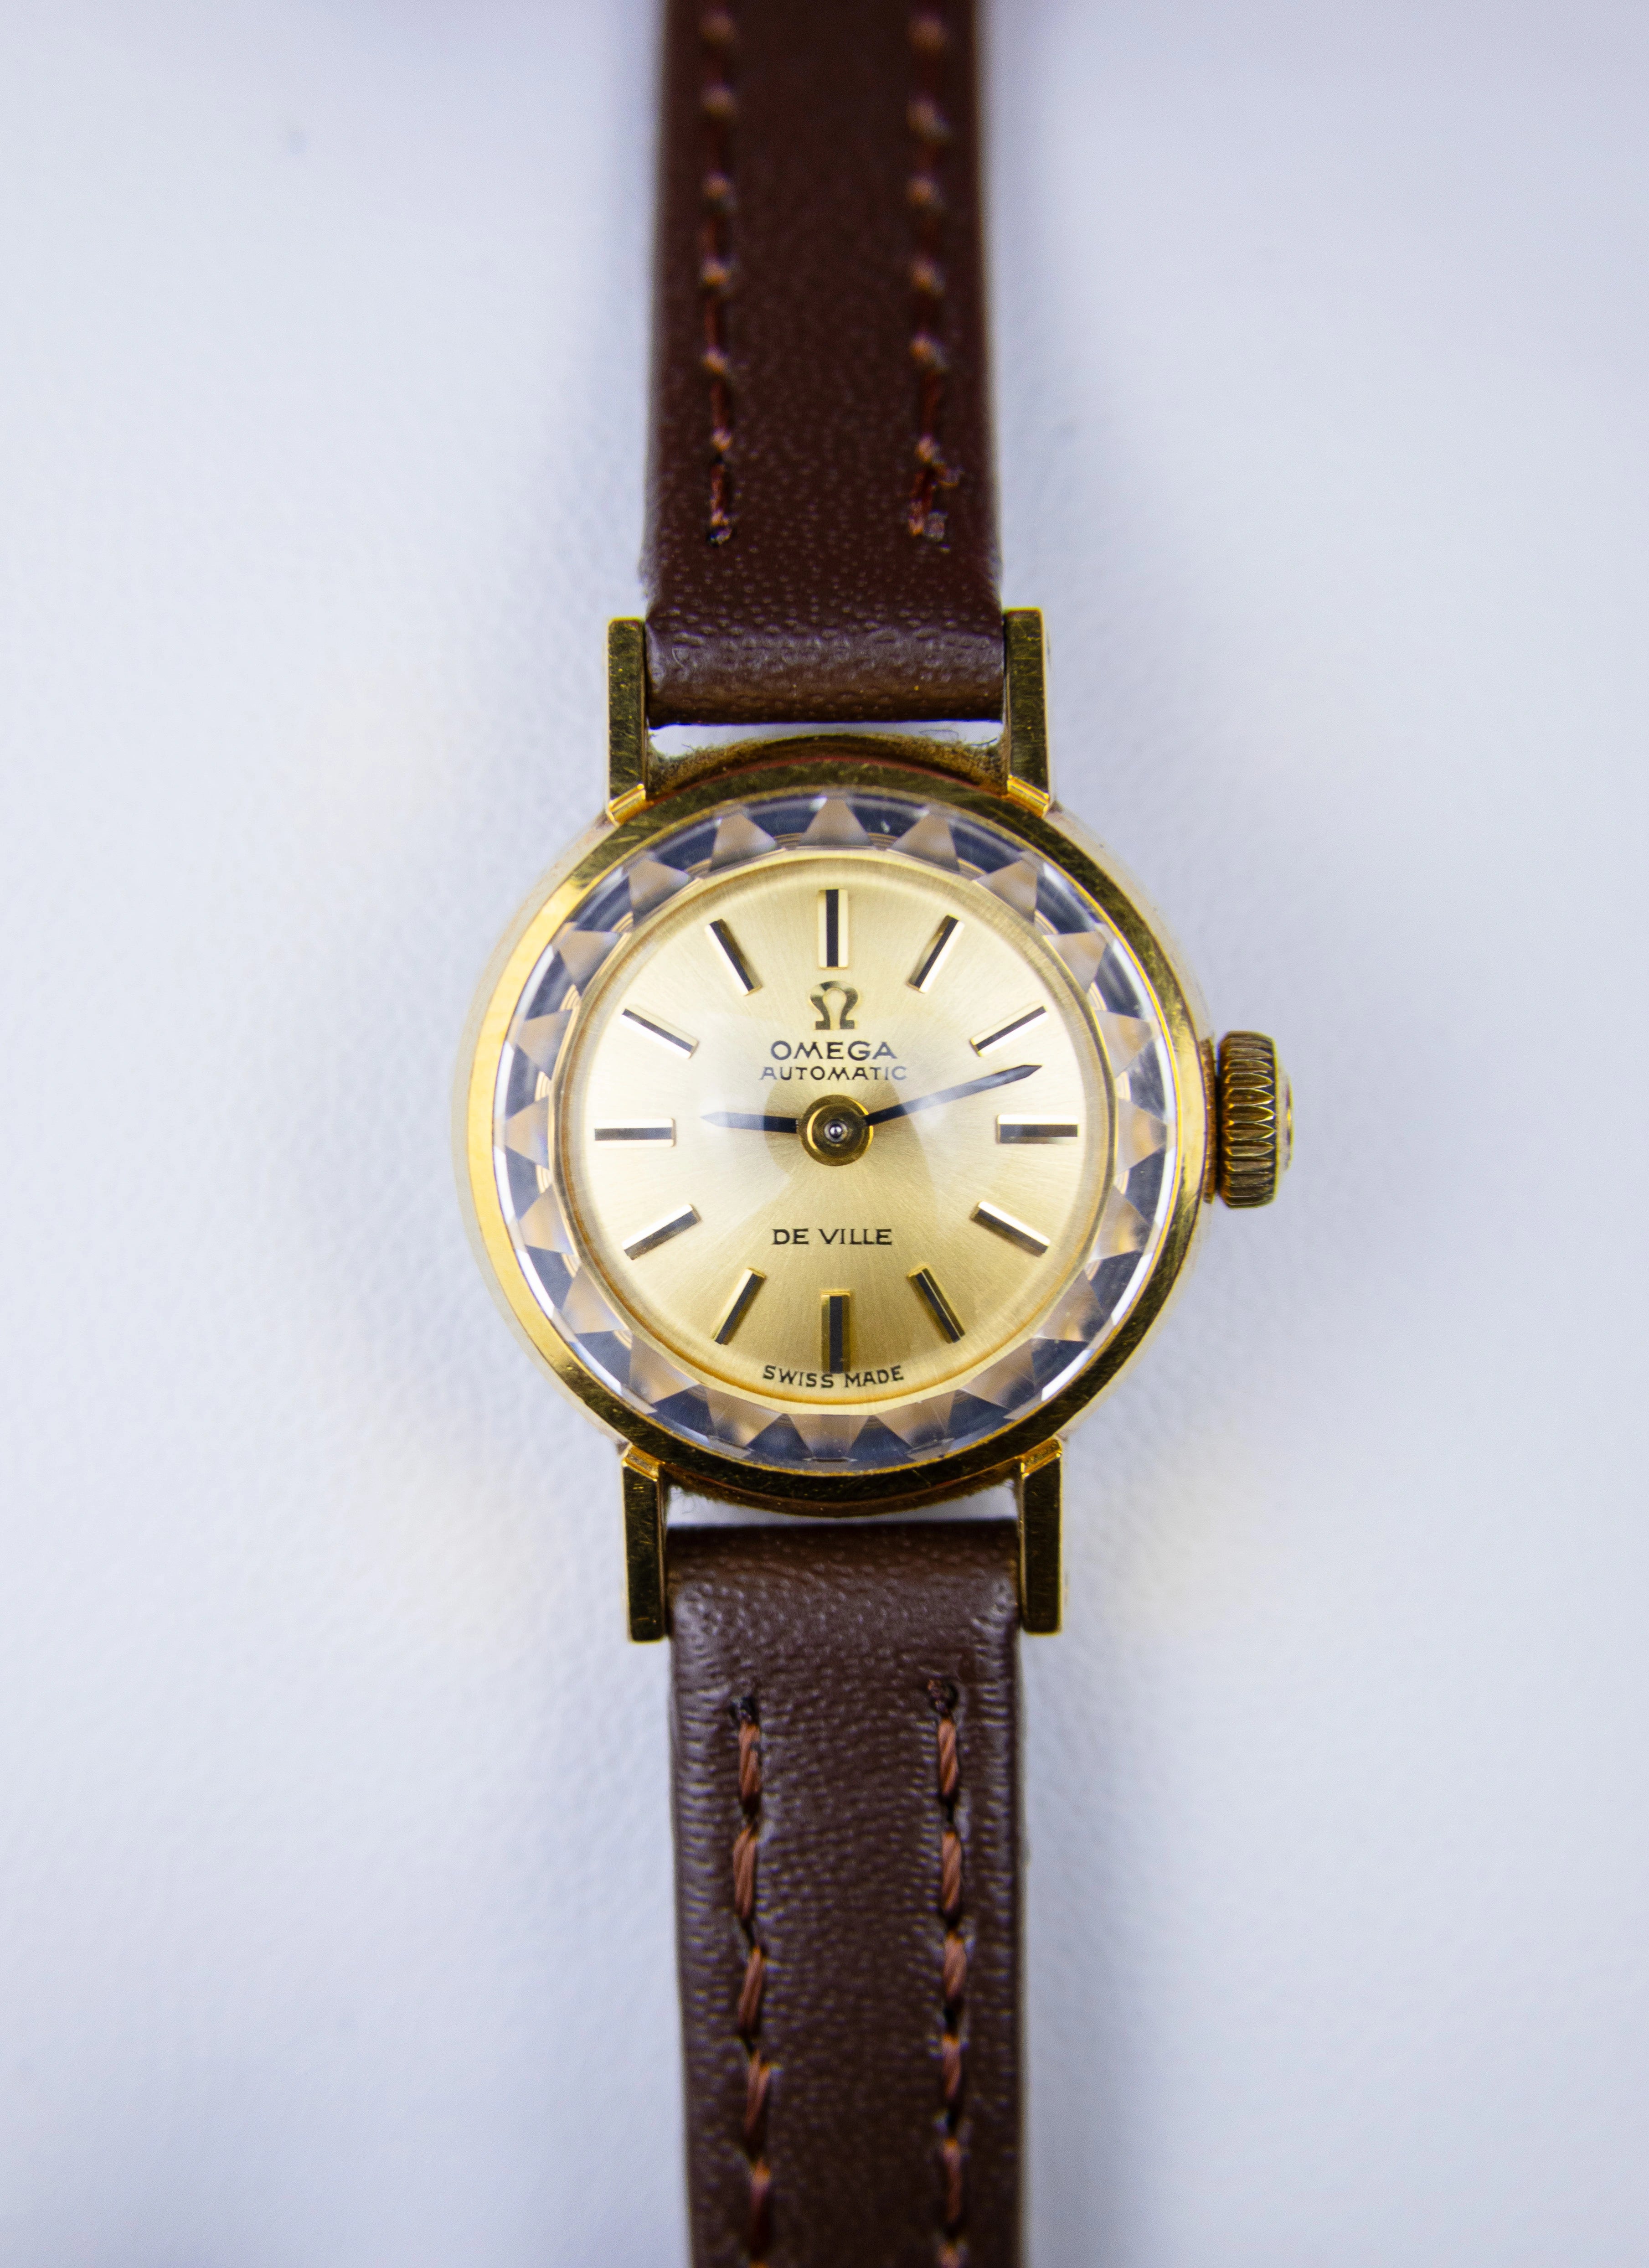 1972 Lady Omega De Ville Automatic Cocktail Watch 551.038 cal. 661